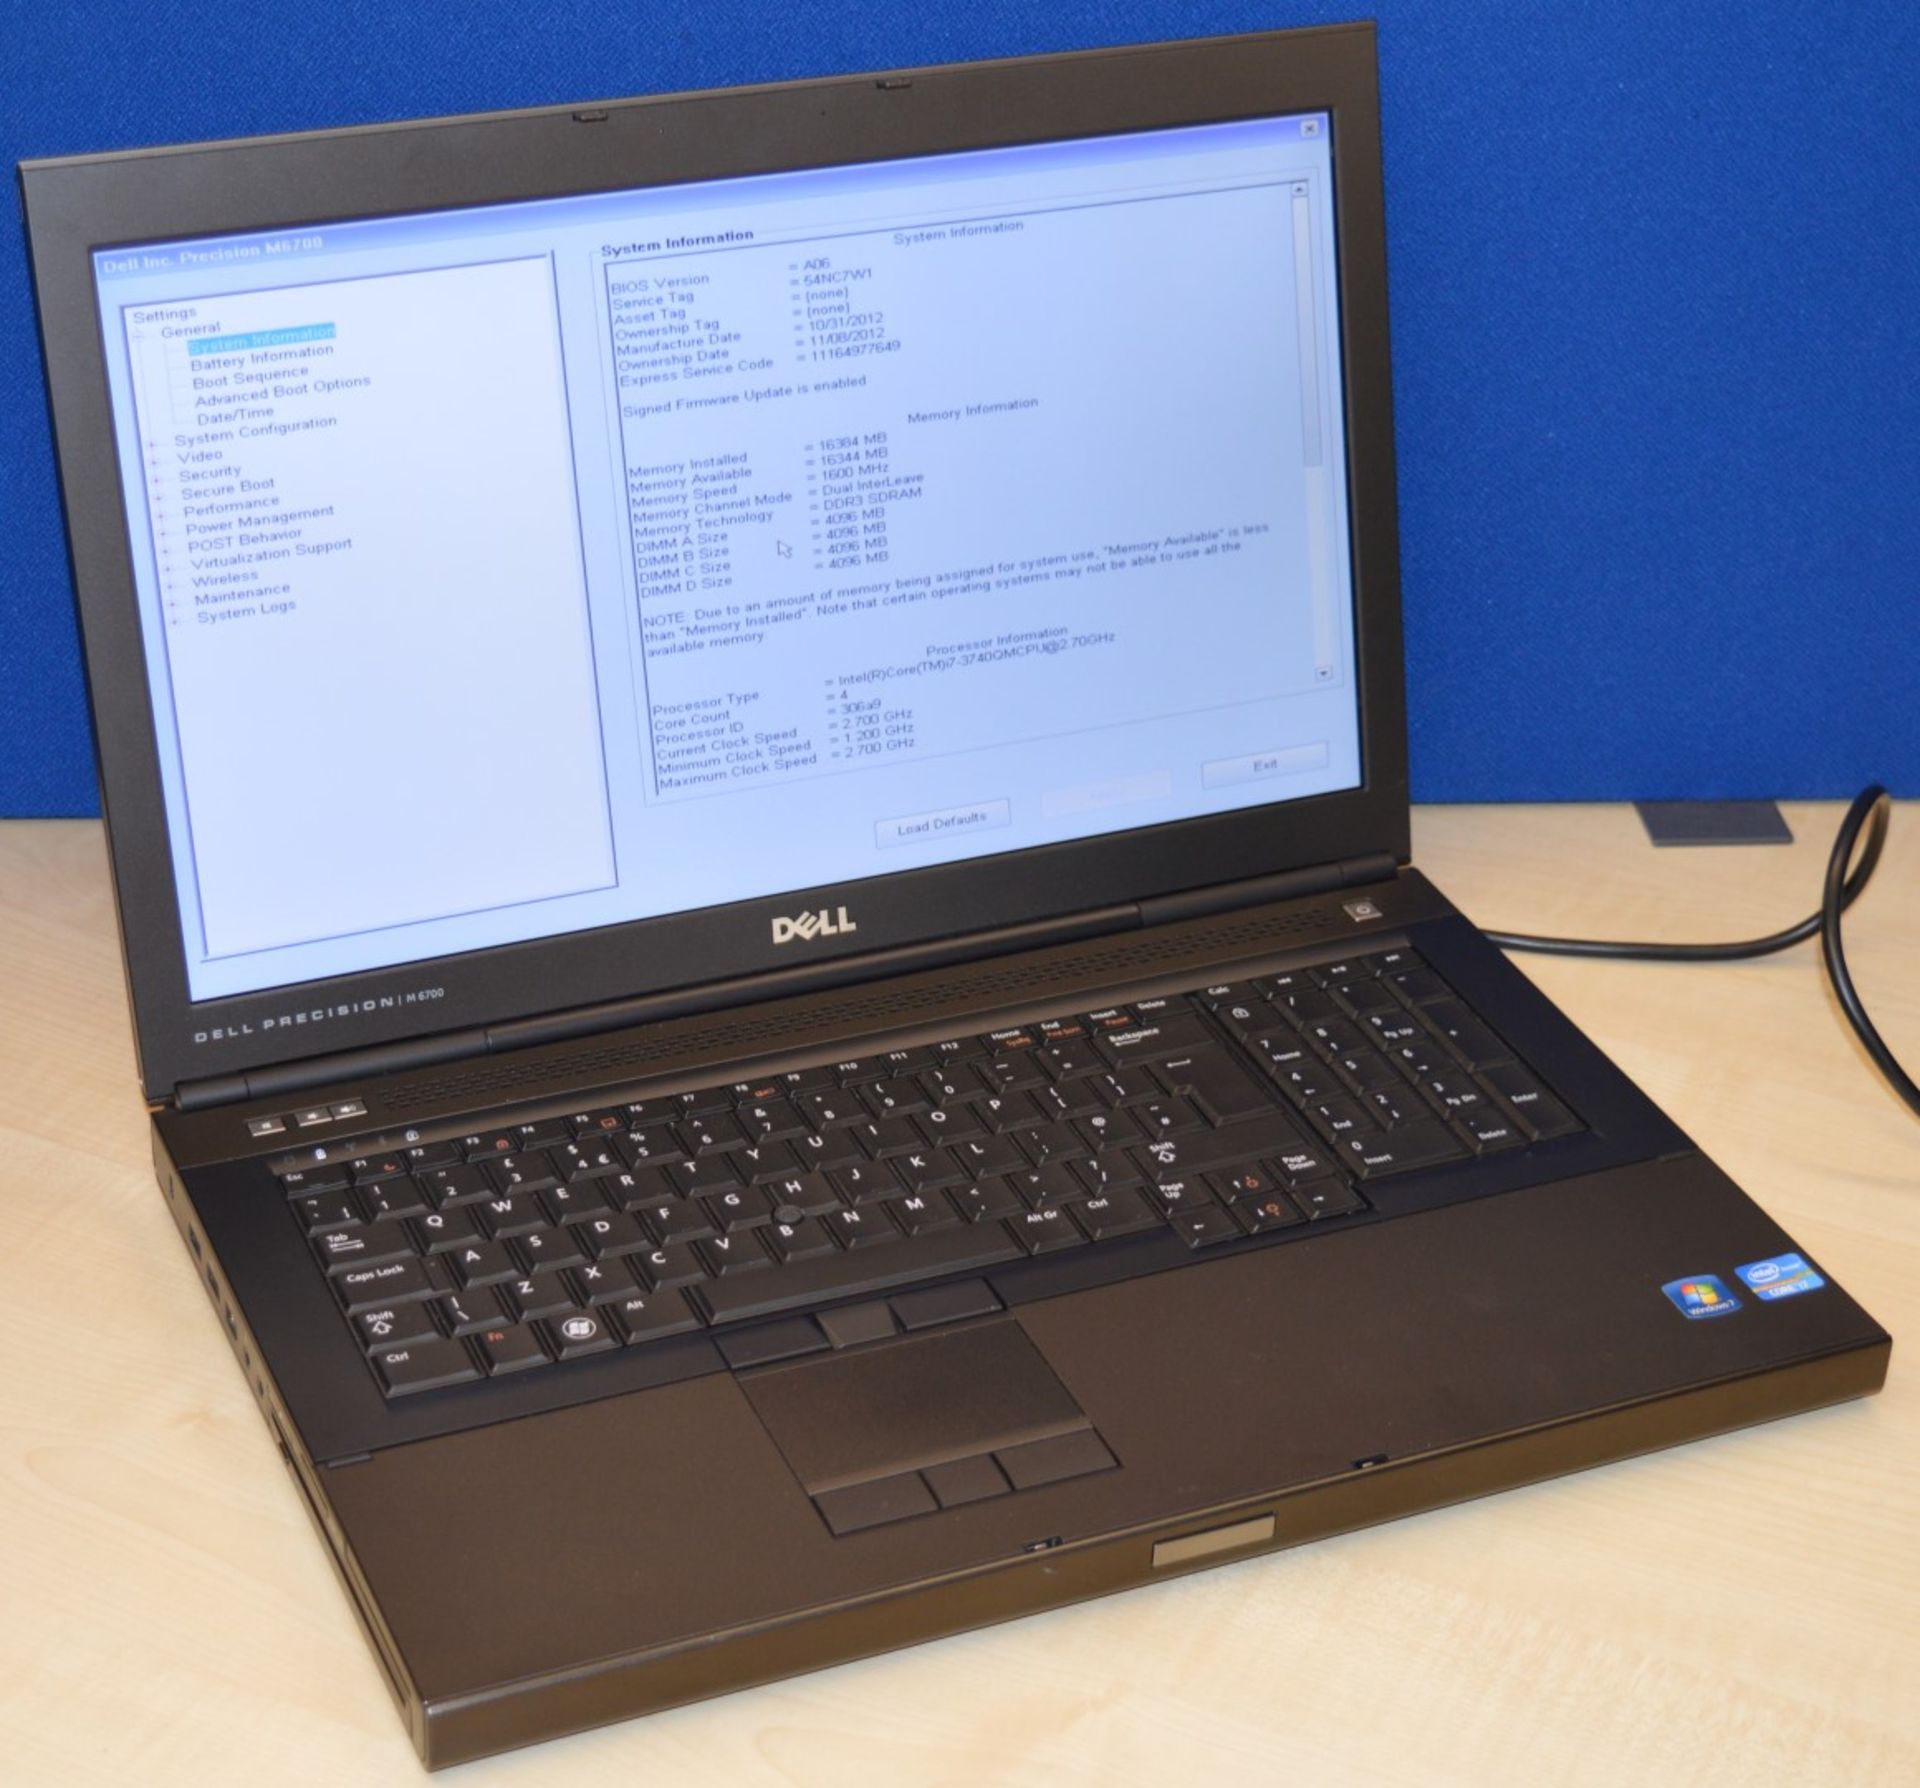 1 x Dell Precision M6700 Business Workstation 17 Inch Laptop - Intel Core i7 2.7ghz Quad Core - Image 2 of 22